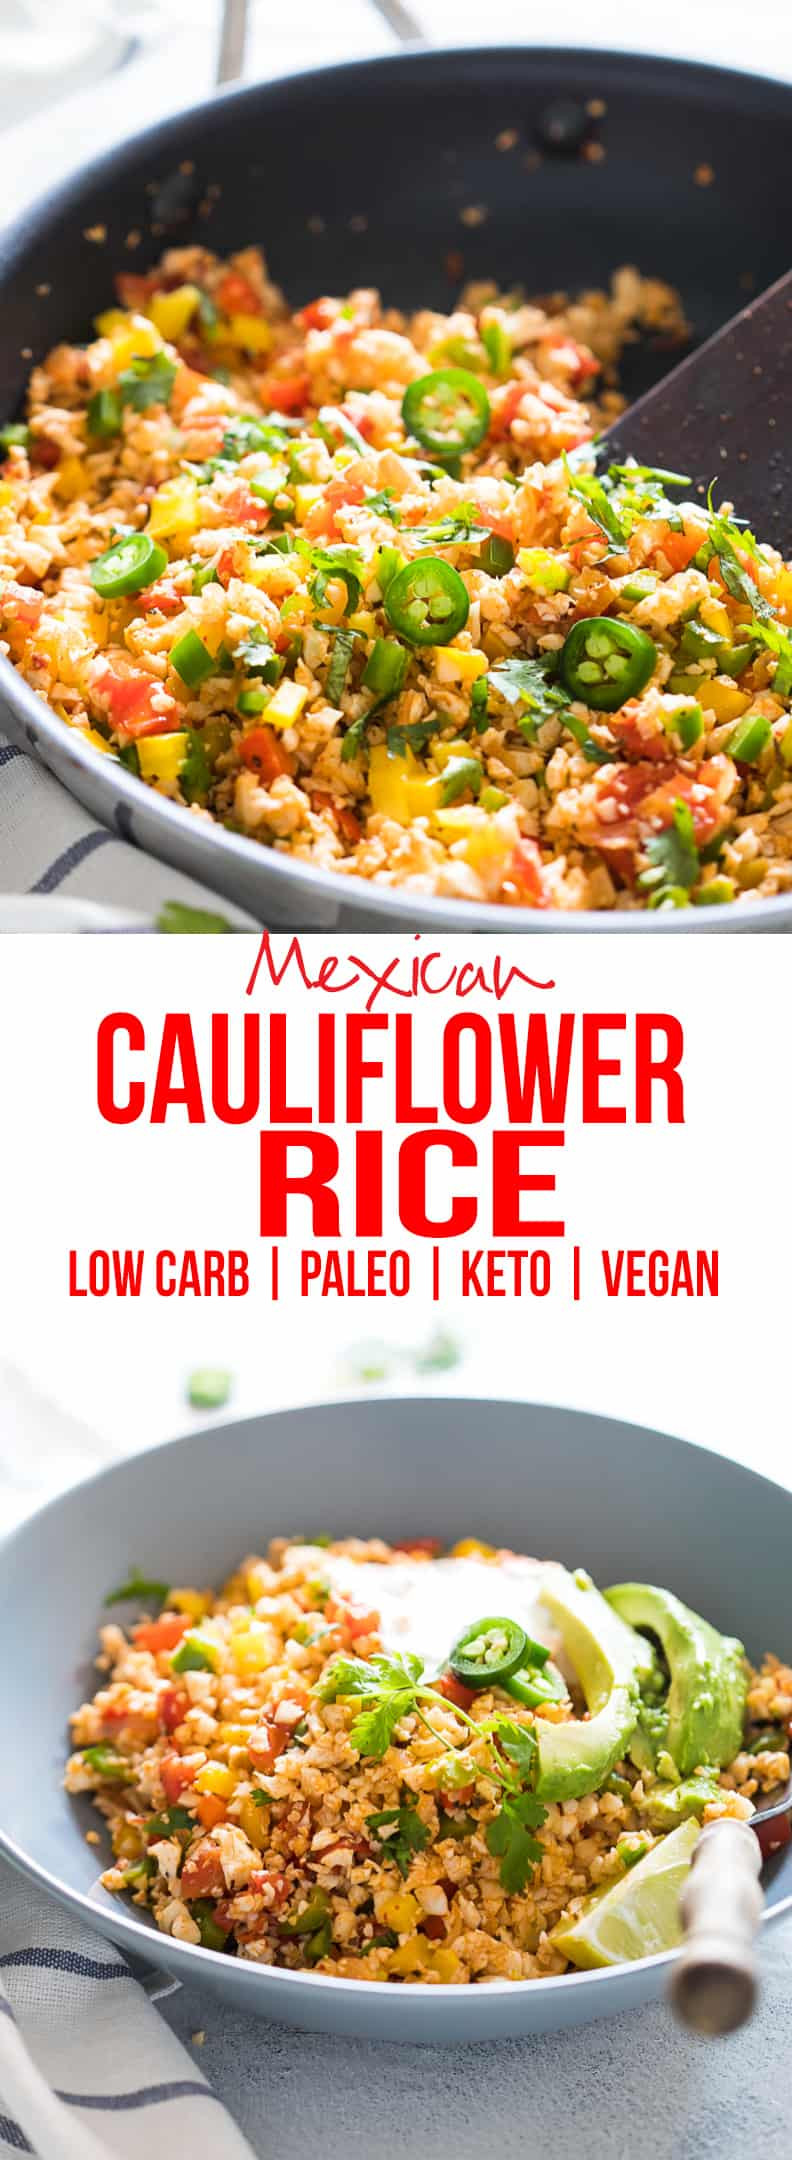 Mexican Keto Low Carb Low Carb Mexican Cauliflower Rice Paleo Vegan Keto